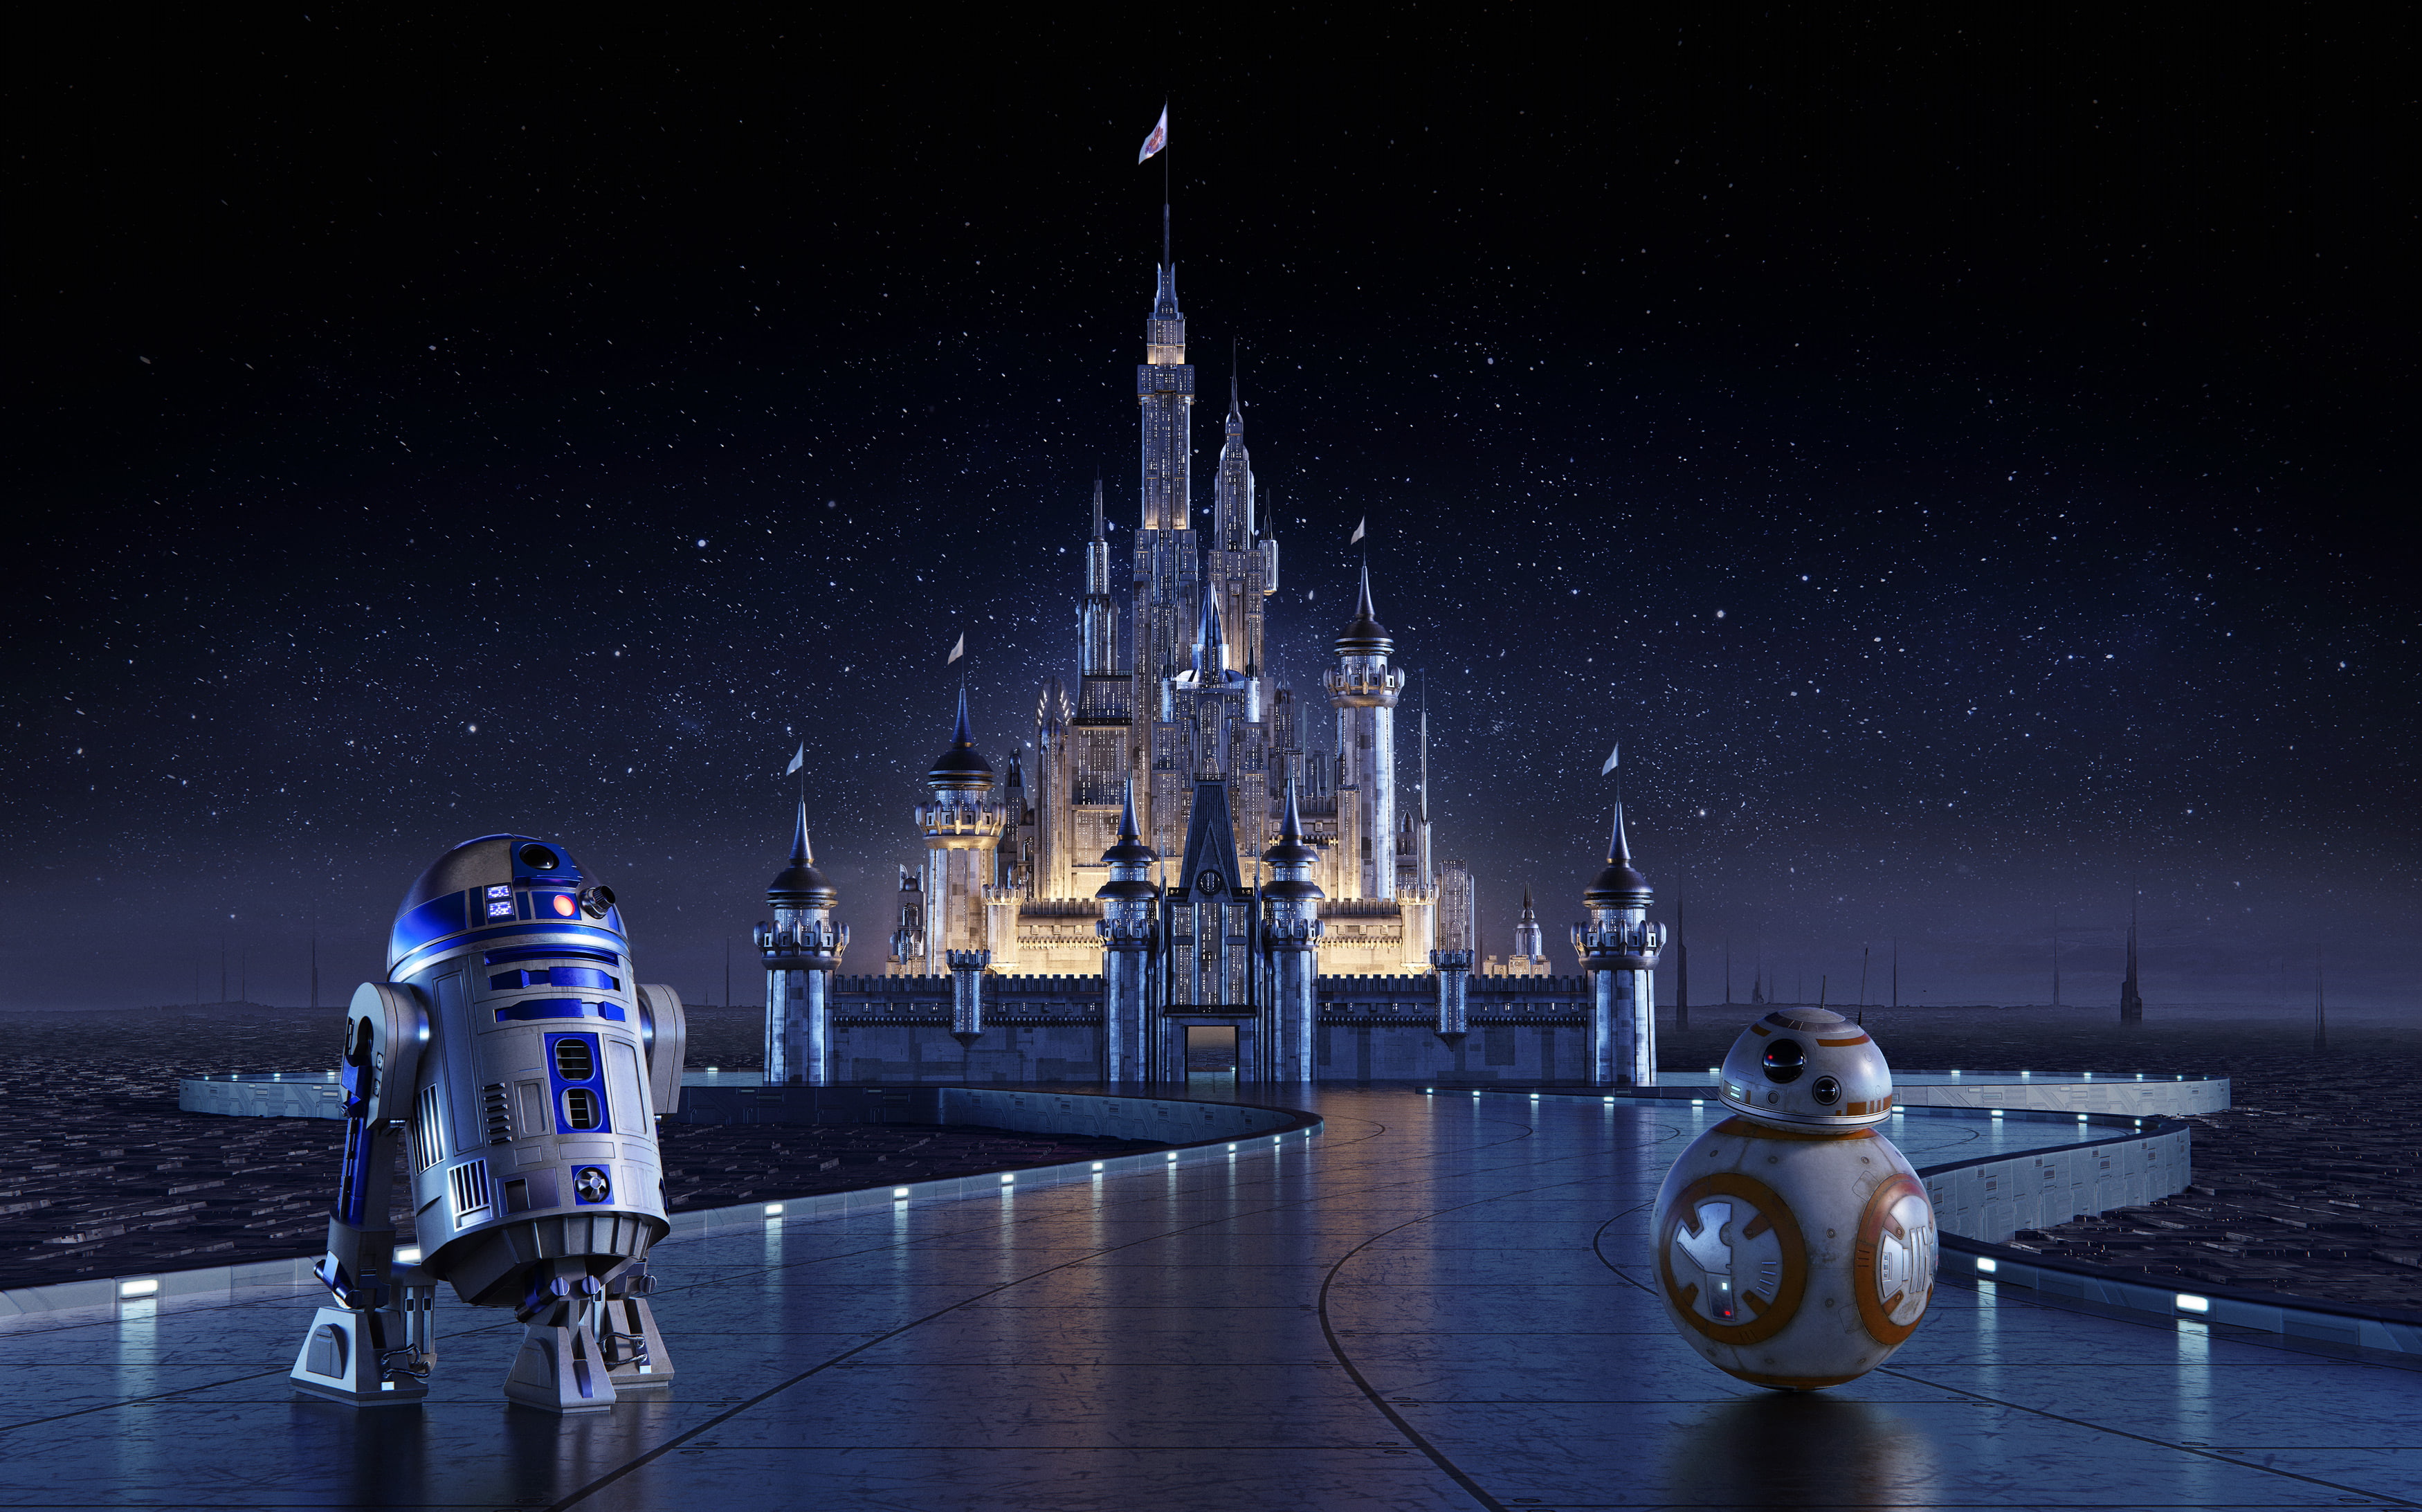 Free Download Hd Wallpaper Disney Castle R2 D2 Bb 8 Star Wars Cinderella Castle 4k Wallpaper Flare